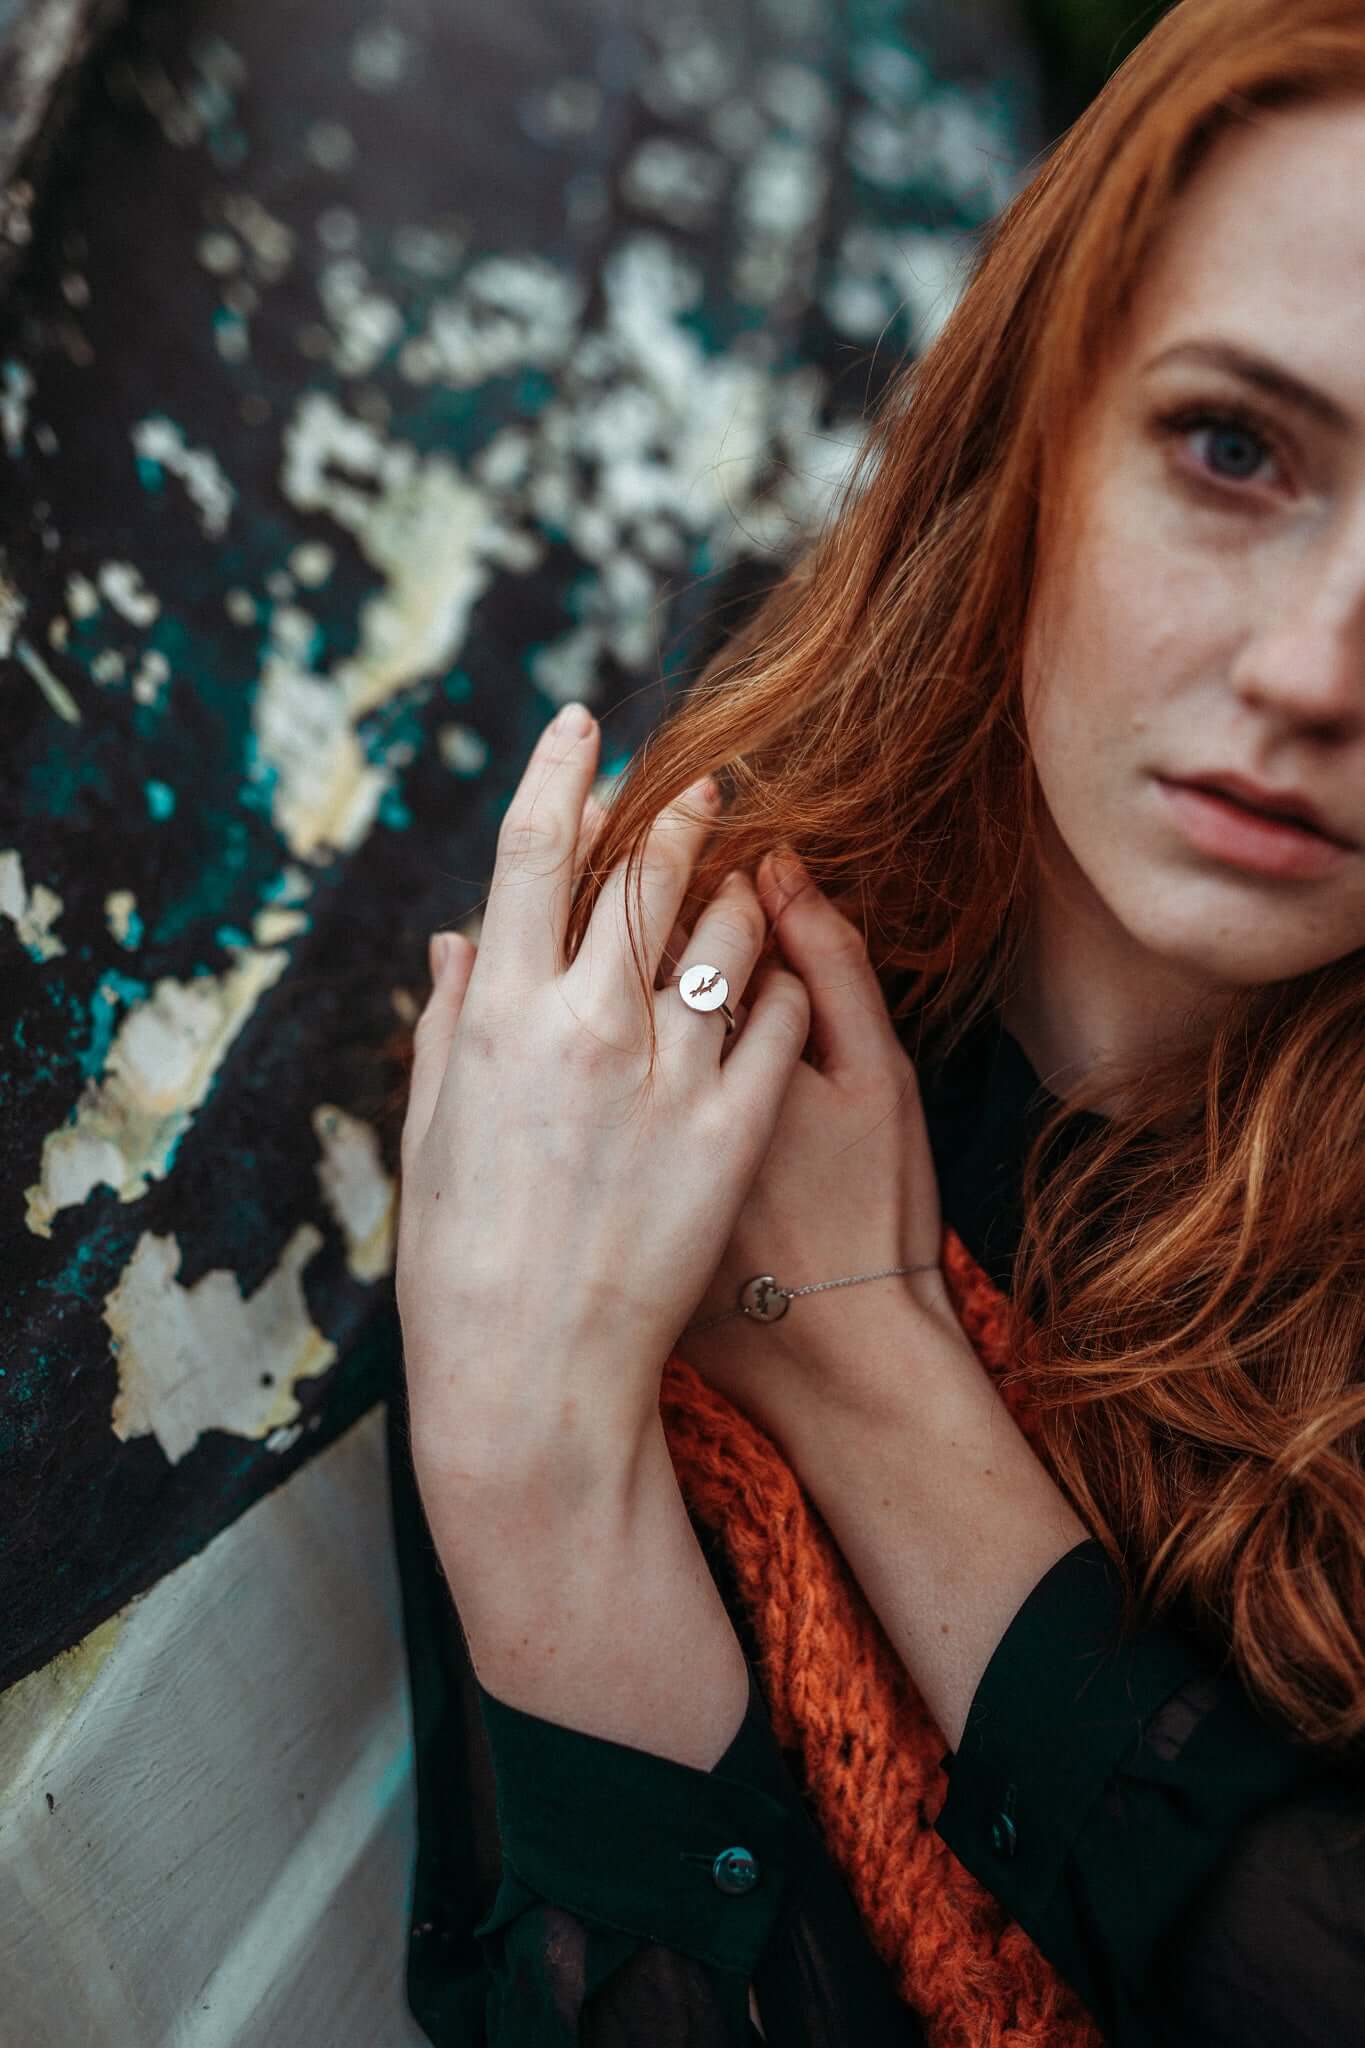 Malin is wearing a fjord ring designed by Per Ekenberg